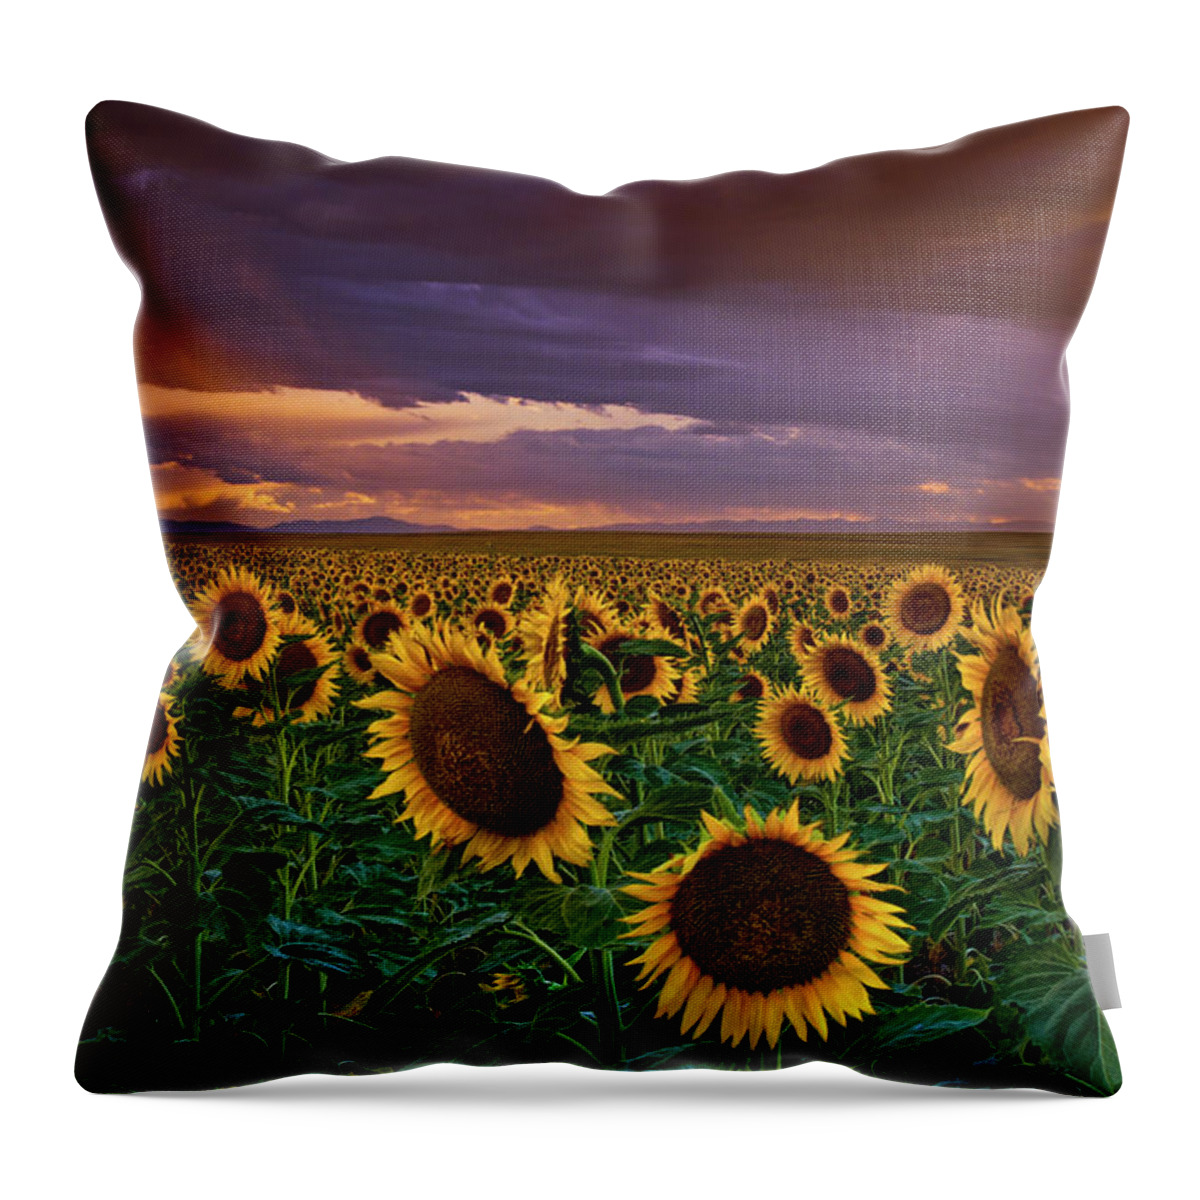 Colorado Throw Pillow featuring the digital art God's Painted Sky by John De Bord